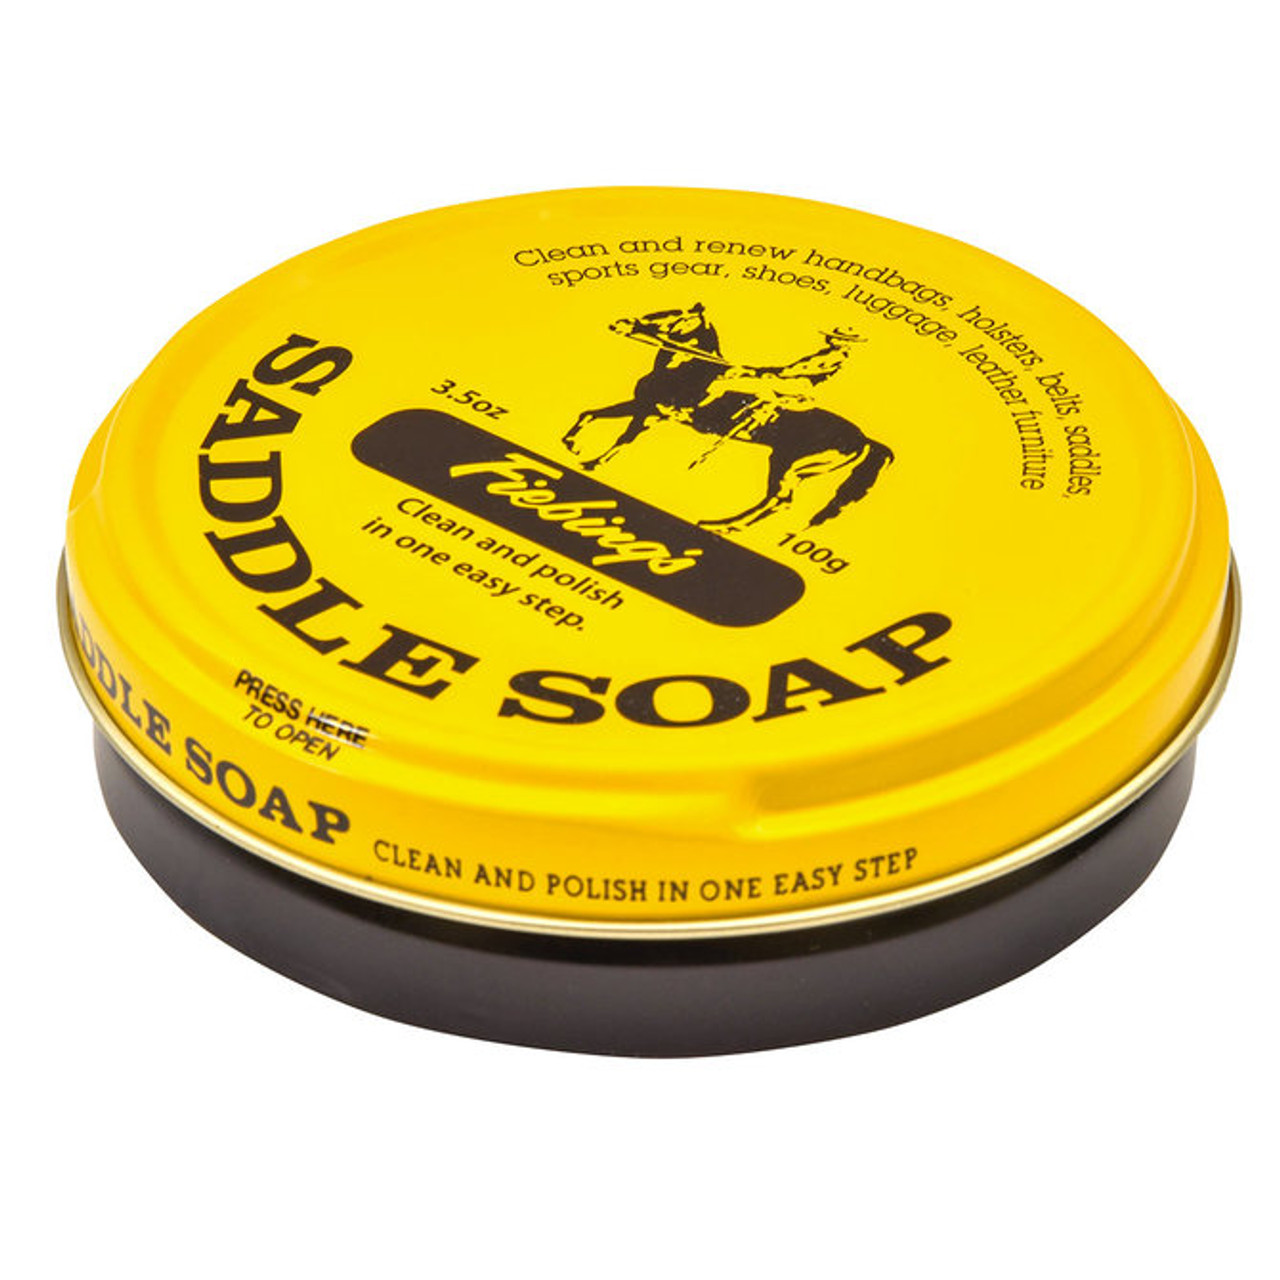 Saddle soap Fiebings 3.5 oz / 100g